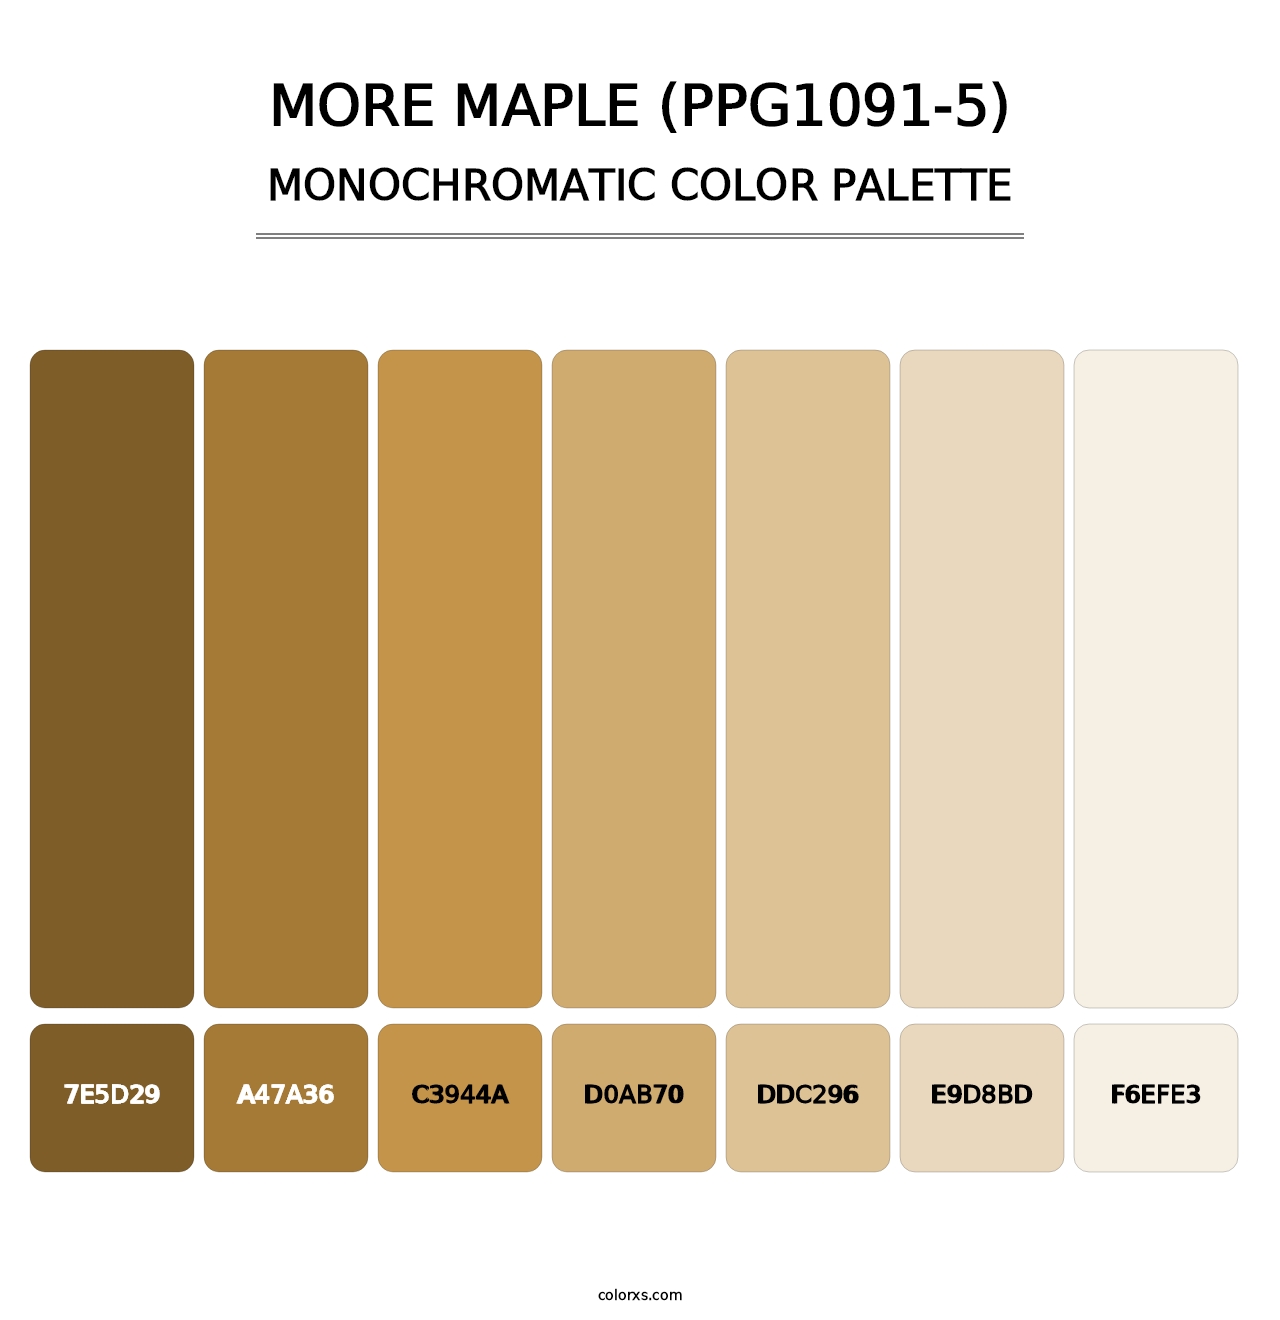 More Maple (PPG1091-5) - Monochromatic Color Palette